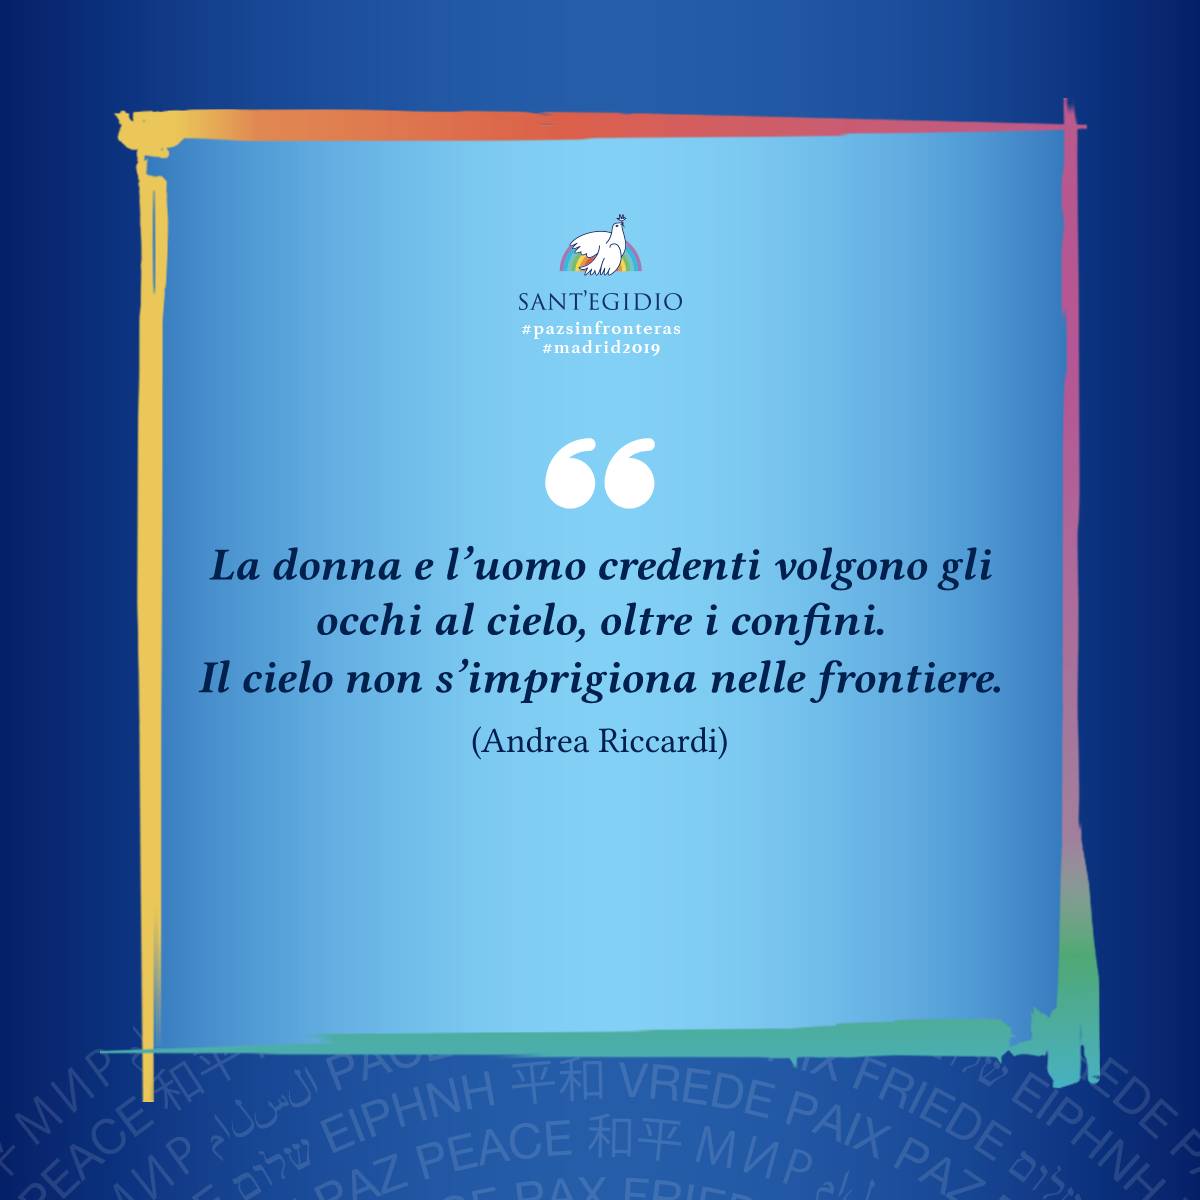 Speech of Andrea Riccardi